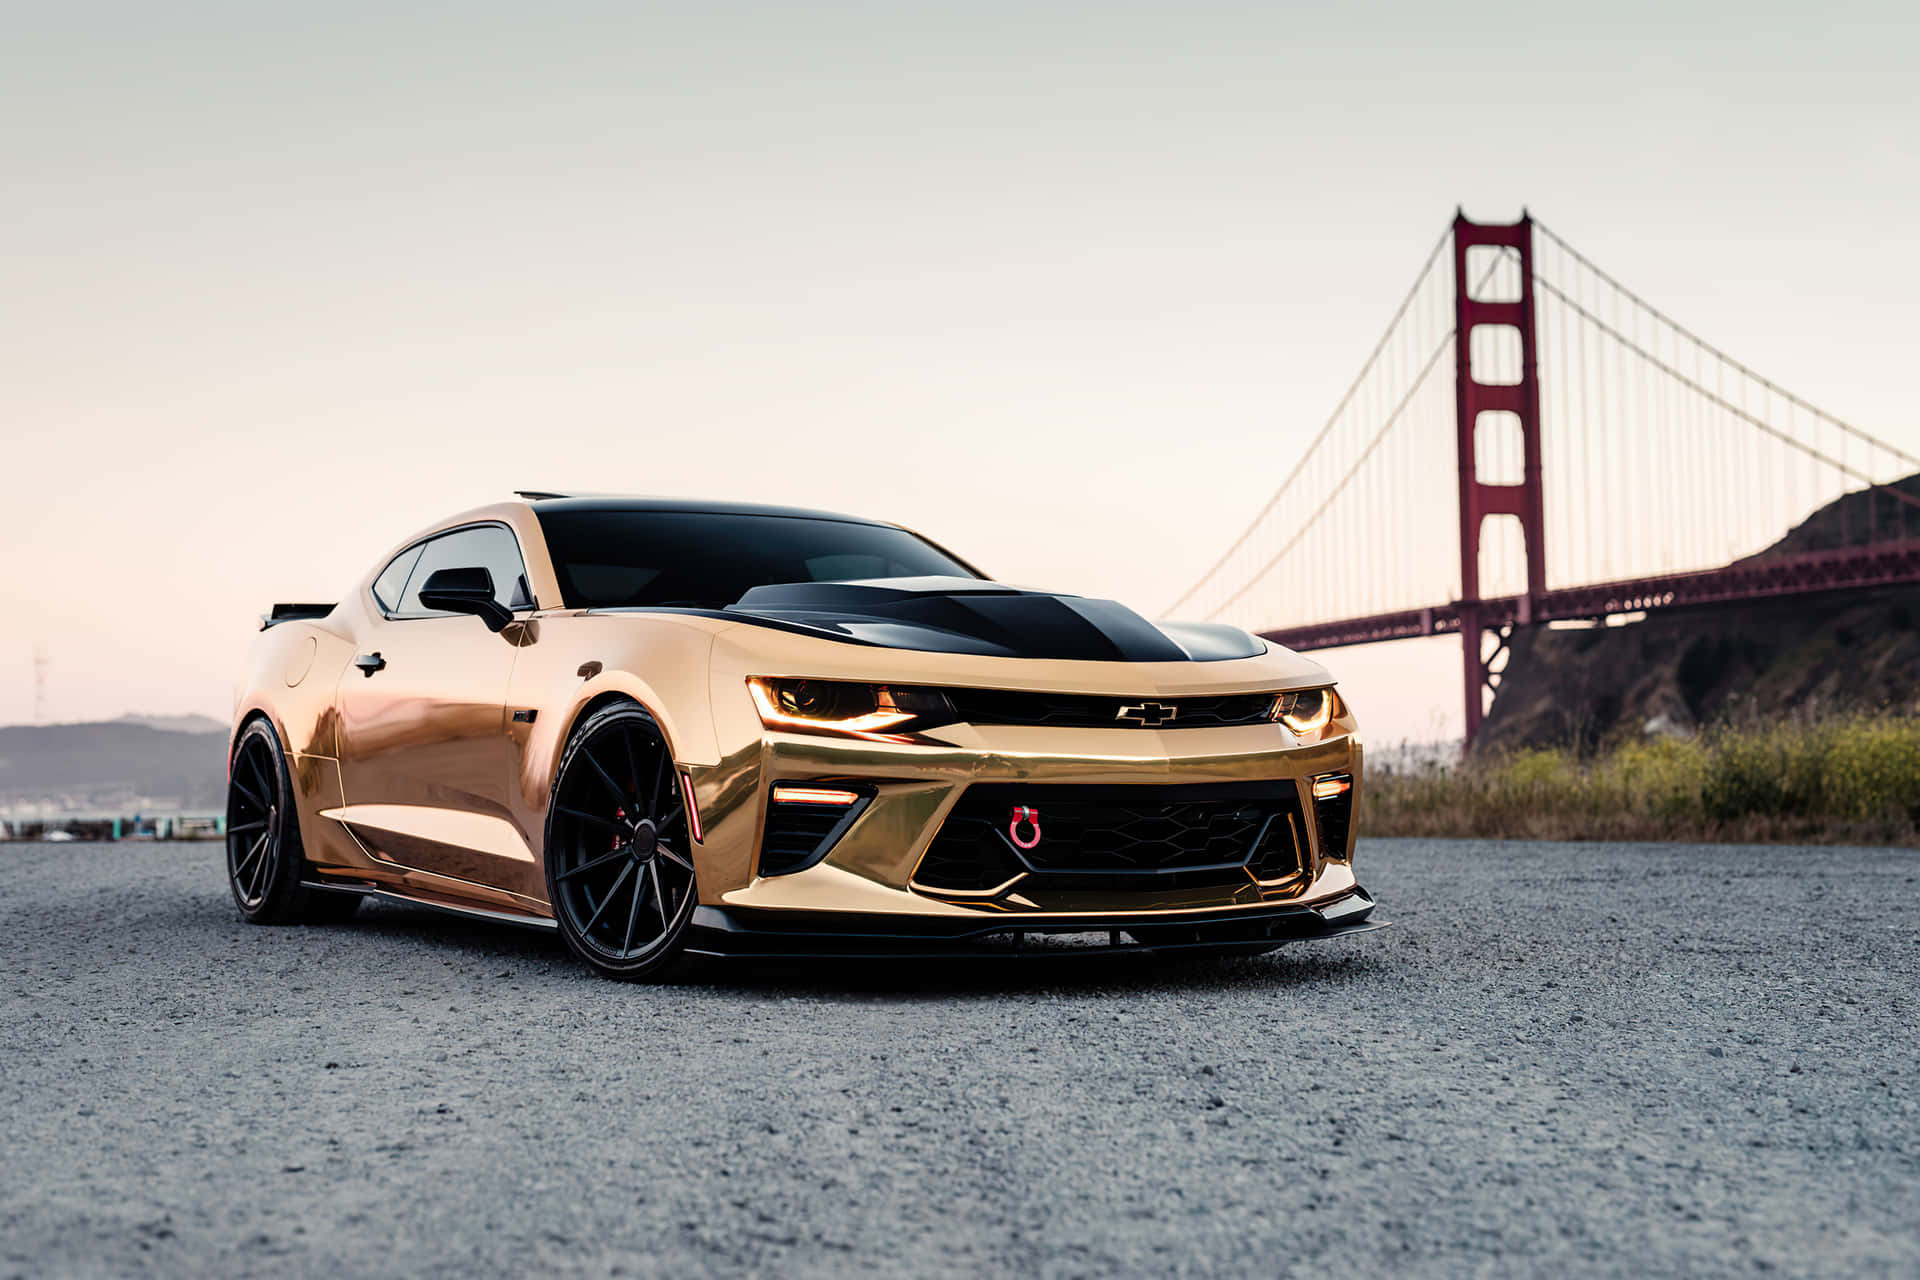 Autod'oro Chevrolet Ponte Golden Gate Sfondo